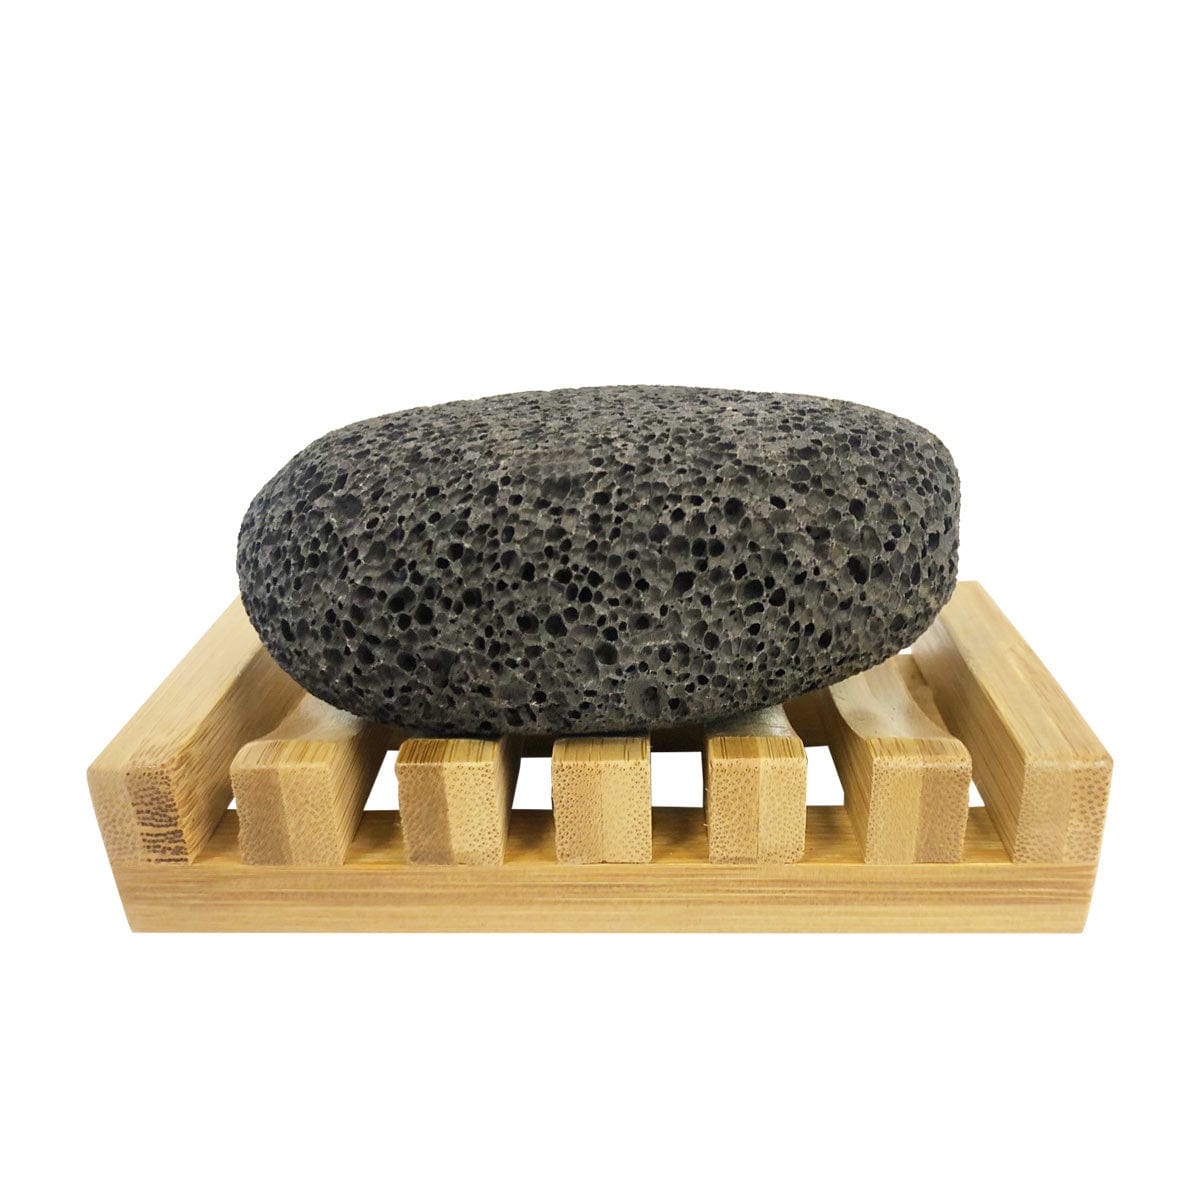 Lava Pumice Stone with Bamboo Tray